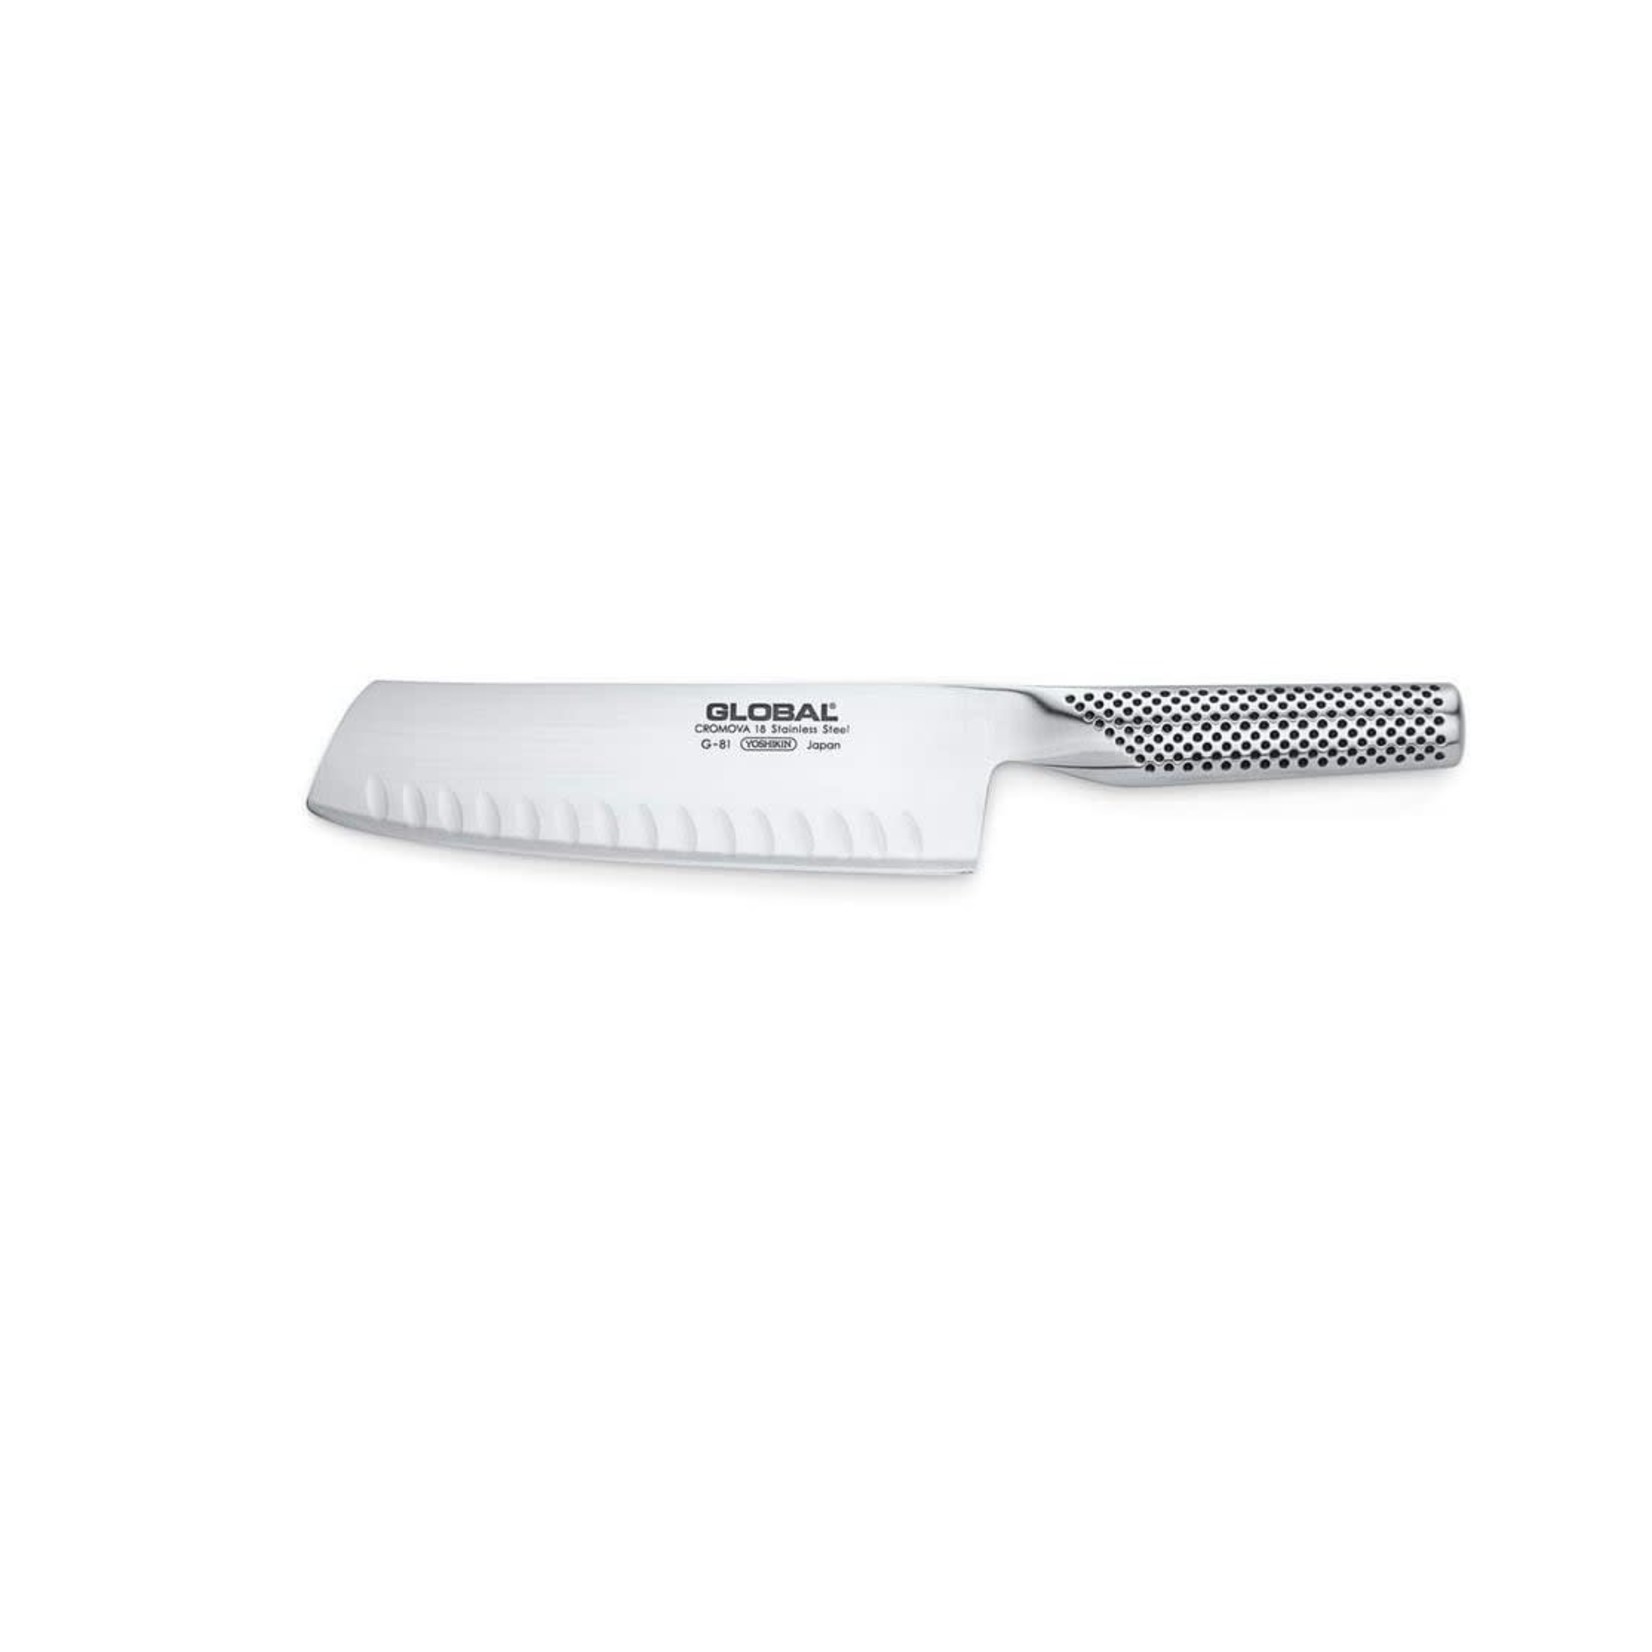 GLOBAL GLOBAL Fluted Vegetable Knife G81 18cm/7in